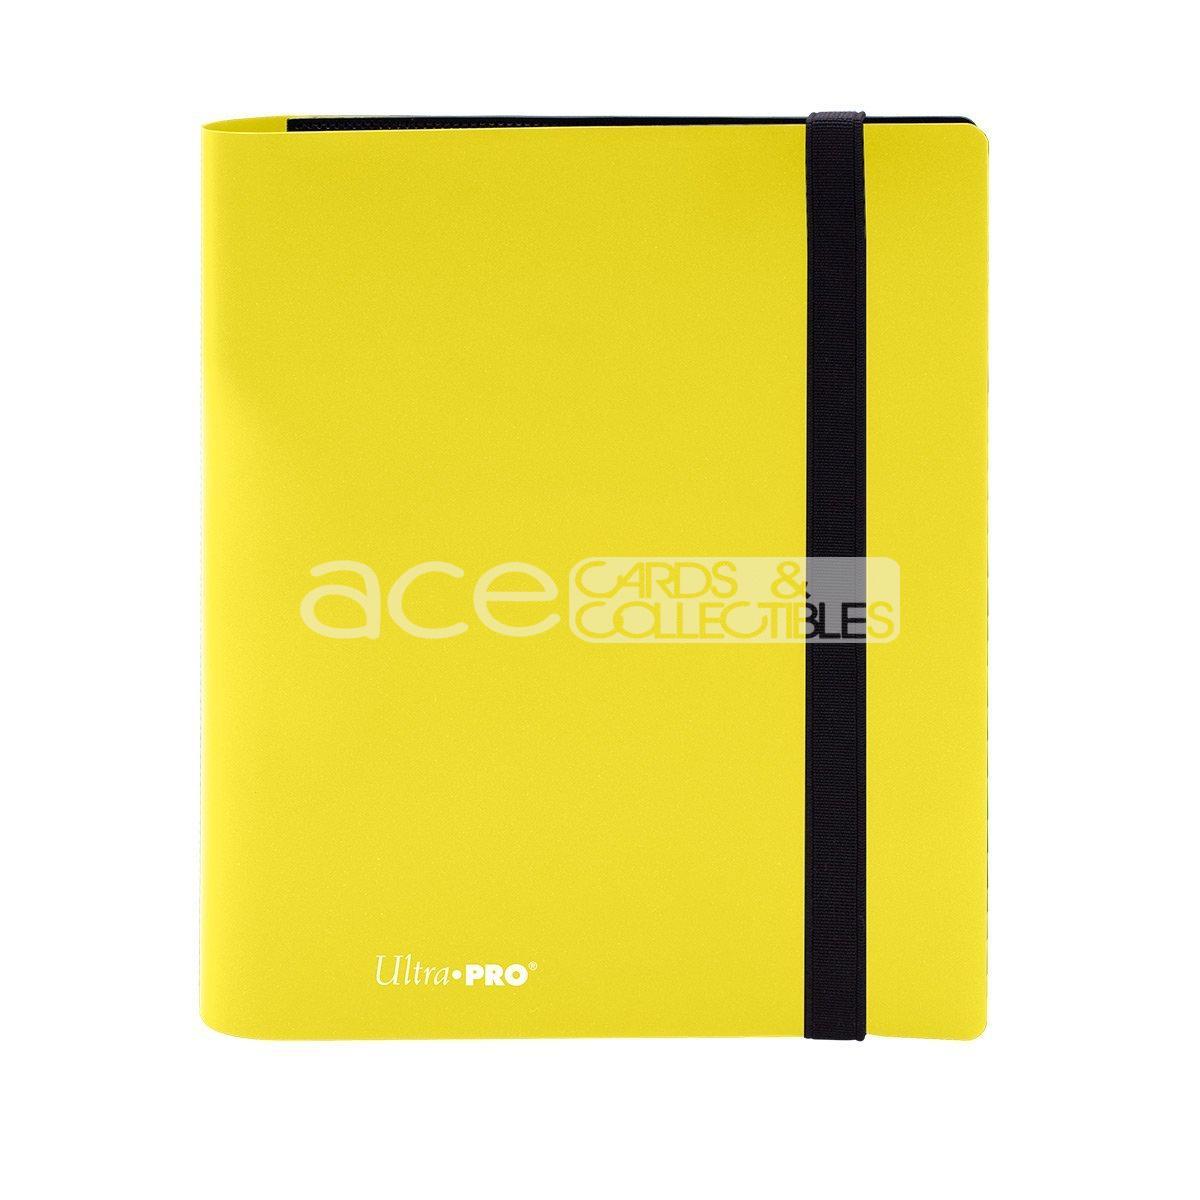 Ultra PRO Album PRO-Binder Eclipse 4-pocket-Lemon Yellow-Ultra PRO-Ace Cards &amp; Collectibles